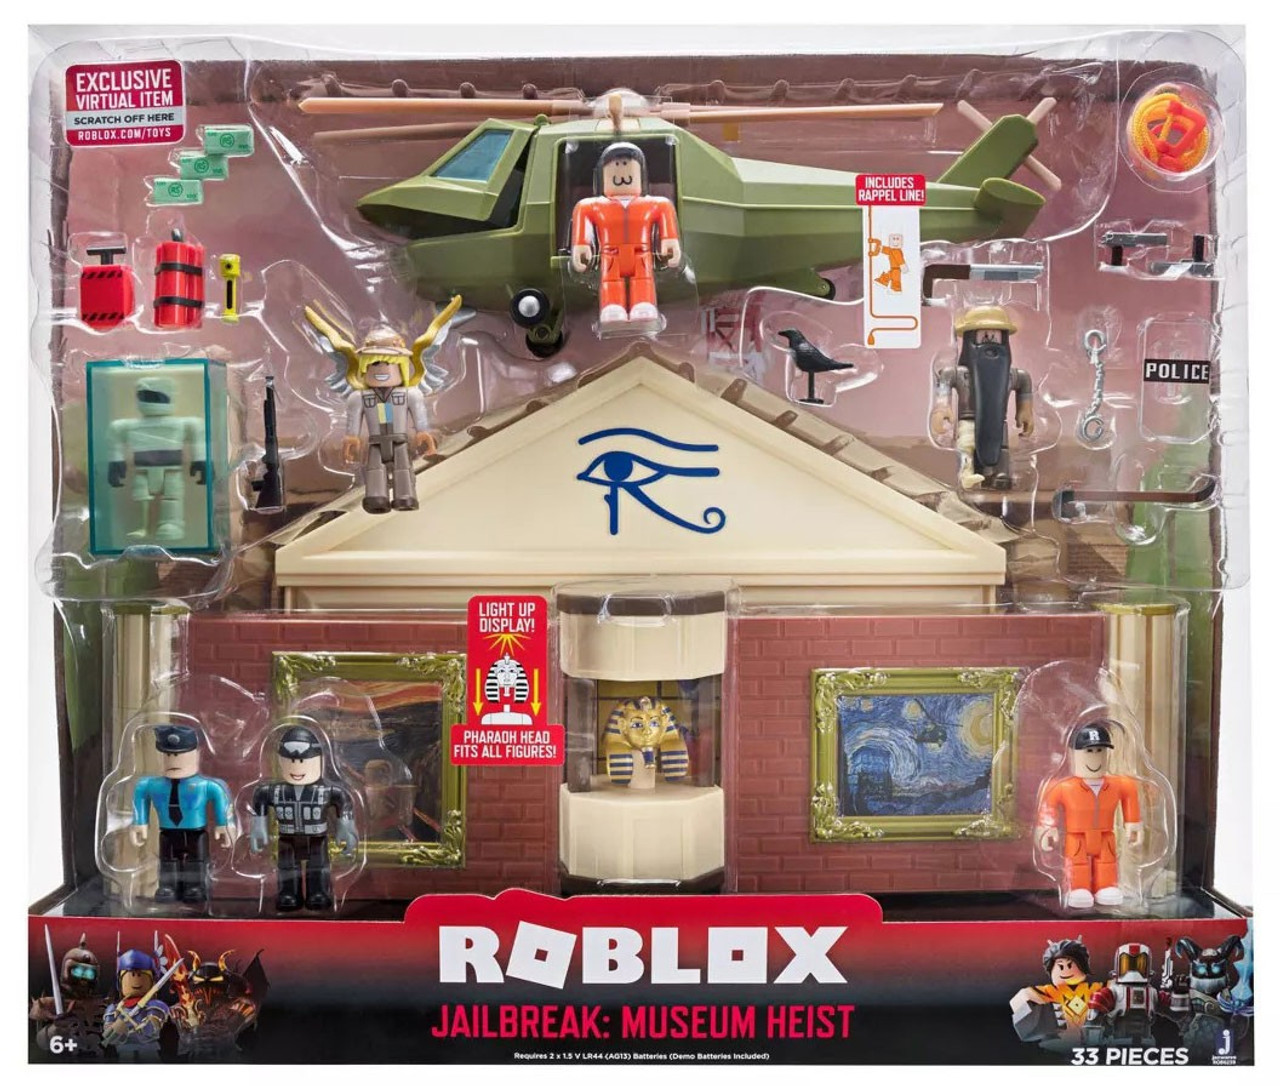 Roblox Desktop Series Jailbreak Museum Heist 3 Inch Playset - videos matching all roblox toy code items series 1 6